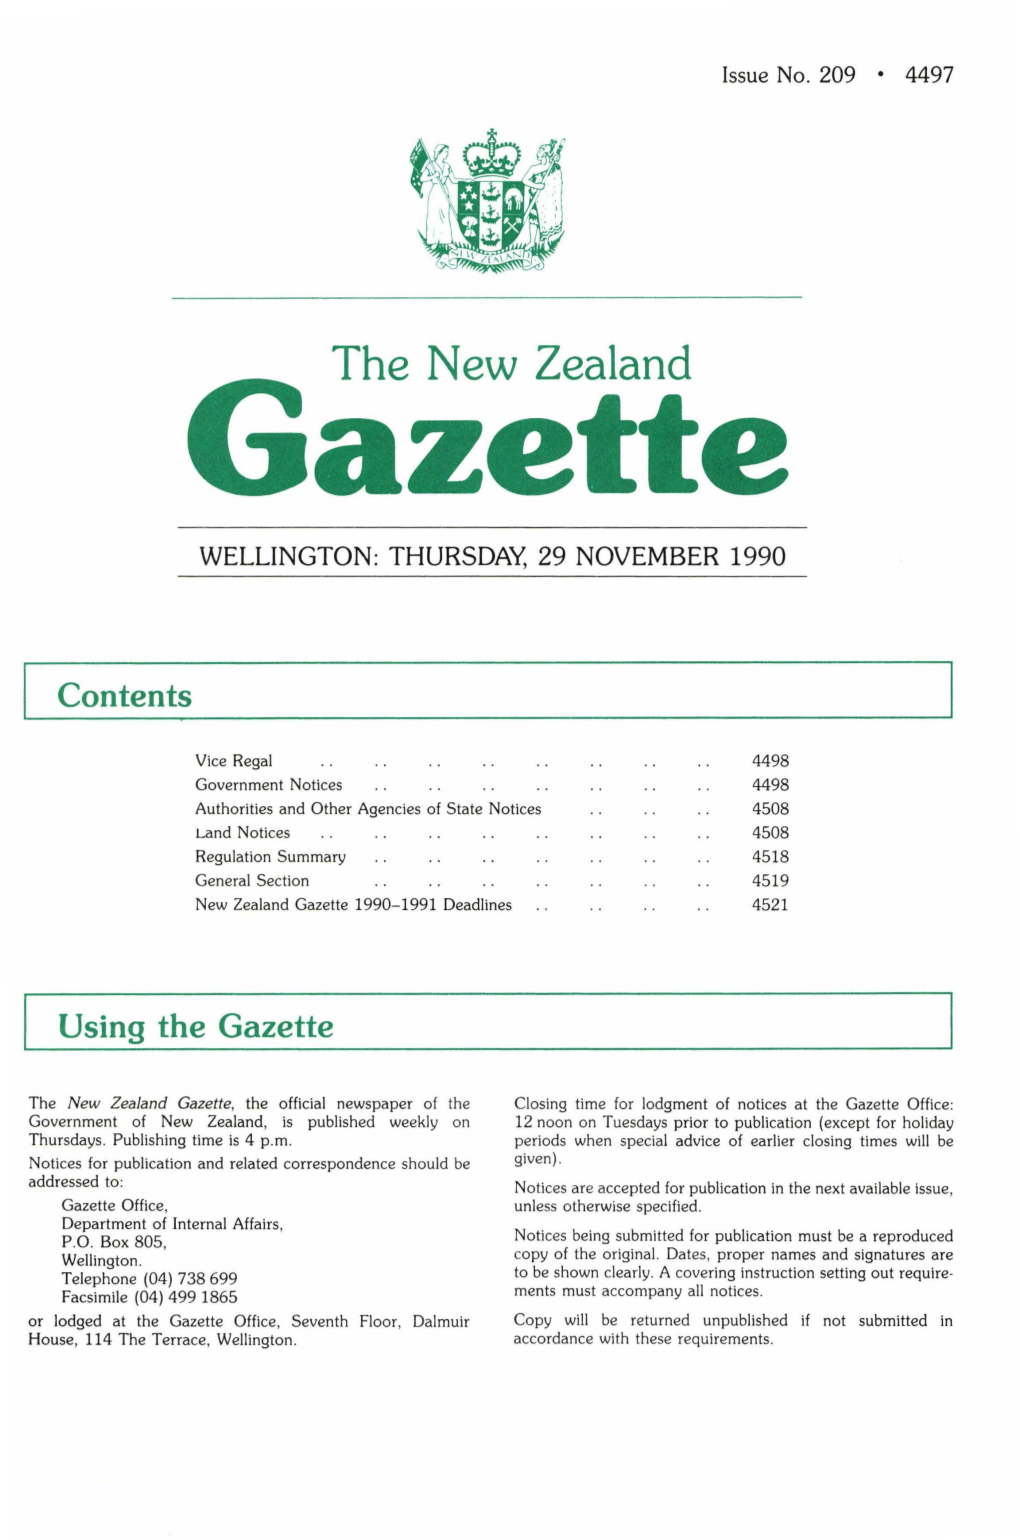 The New Zealand Azette